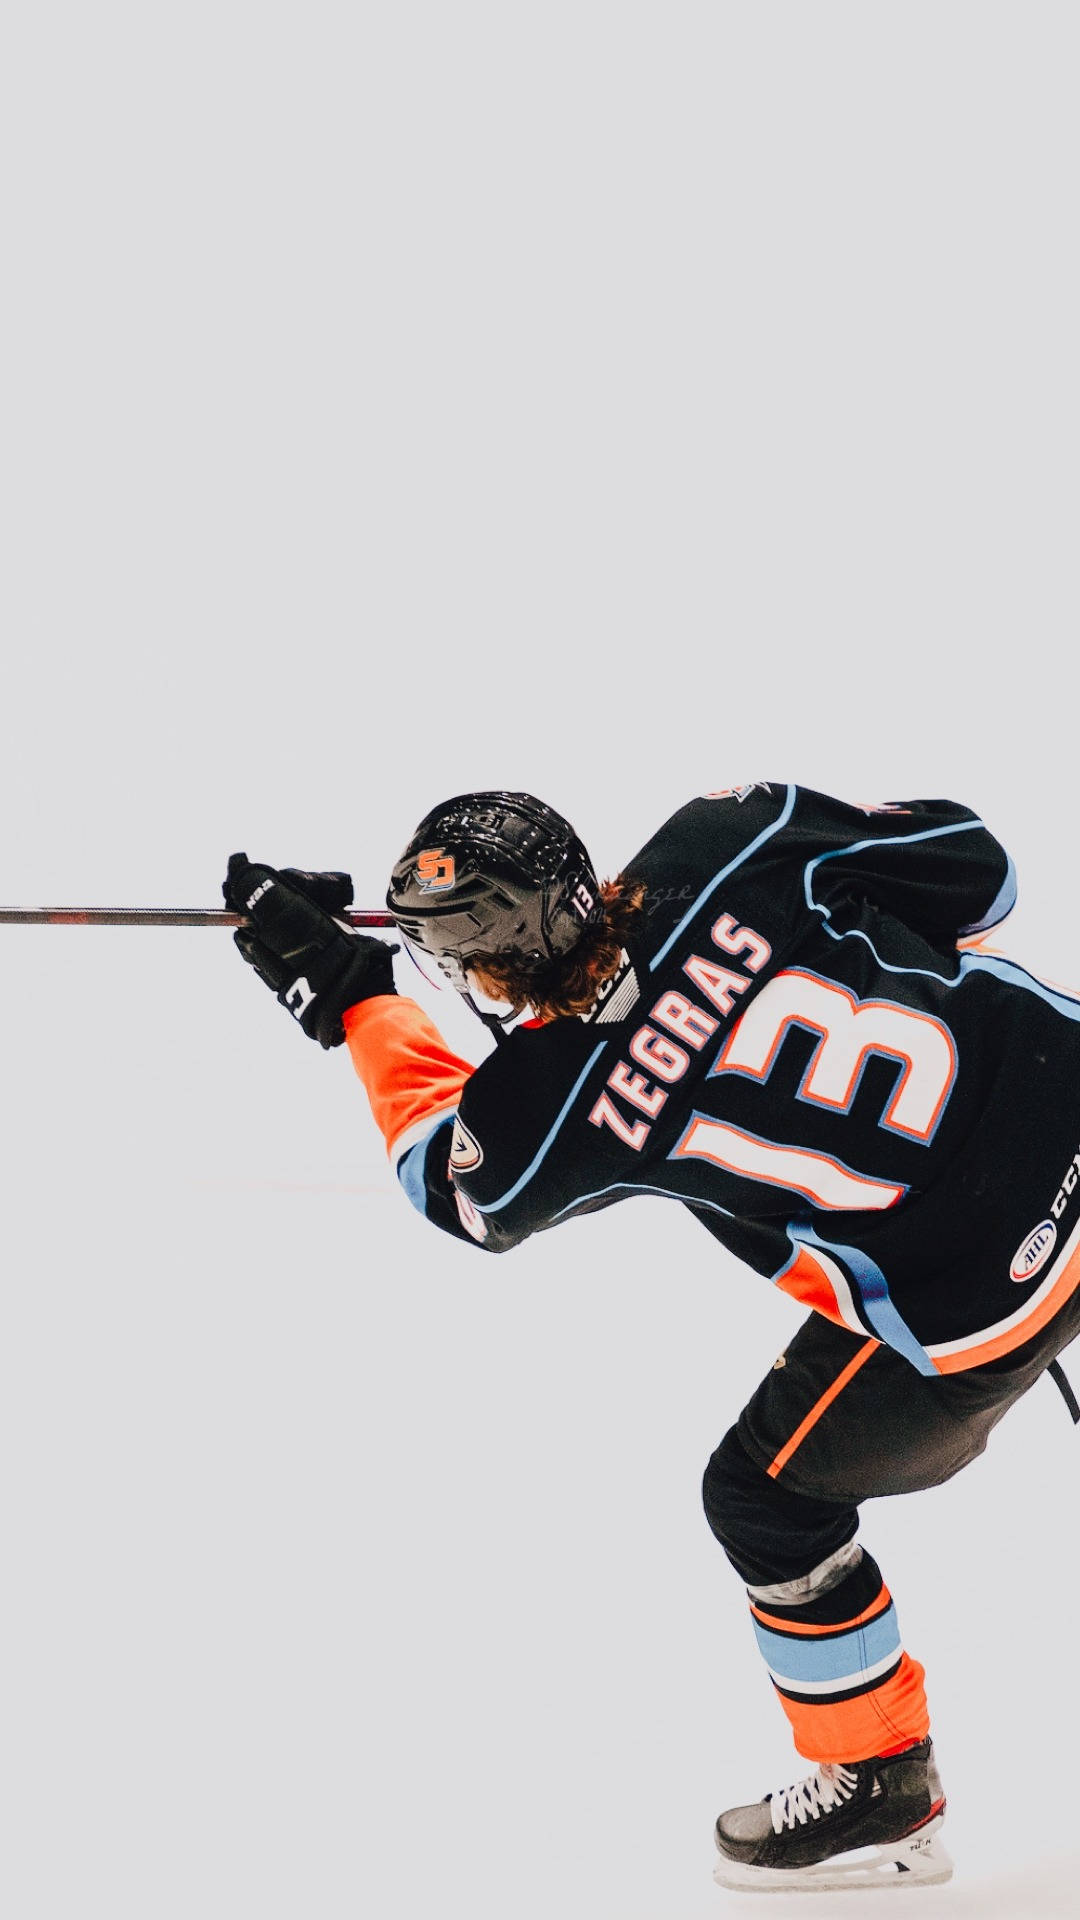 Rising Ice Hockey Star - Trevor Zegras. Background